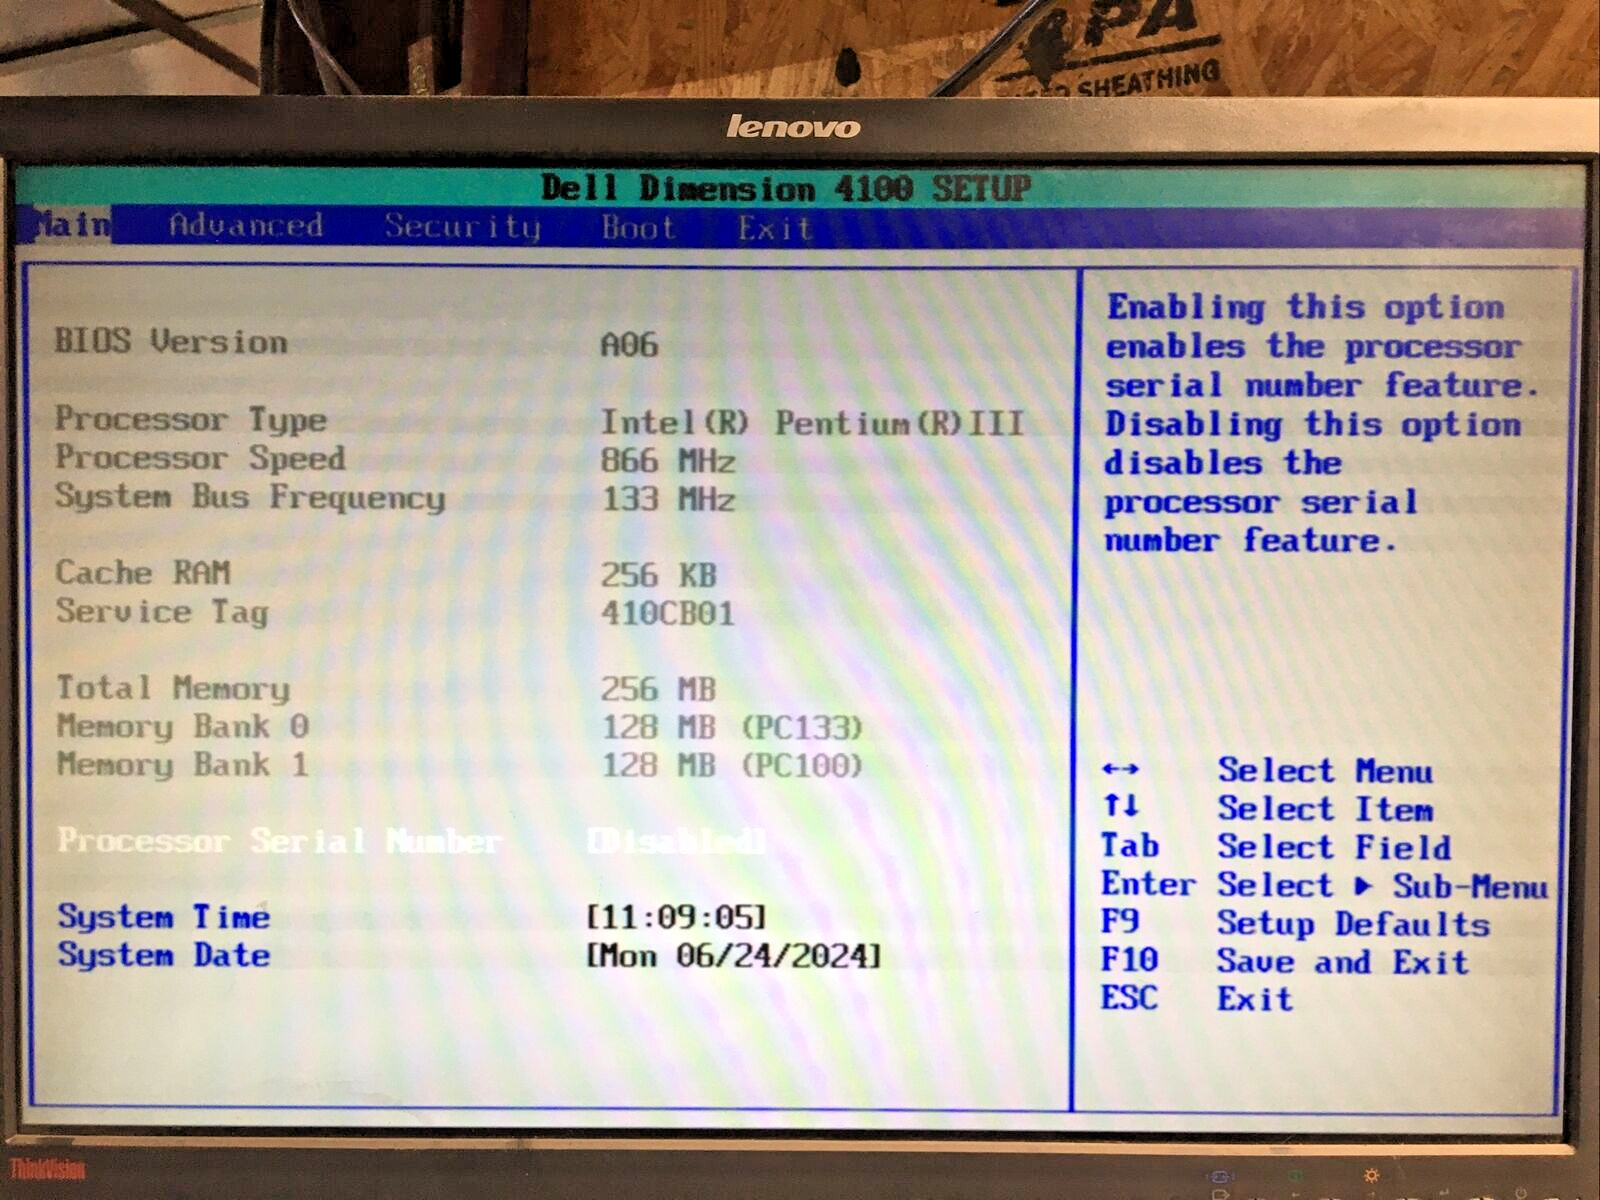 Dell Dimension 4100 Computer Intel Pentium III 3 866MHz 256MB RAM Boots to BIOS